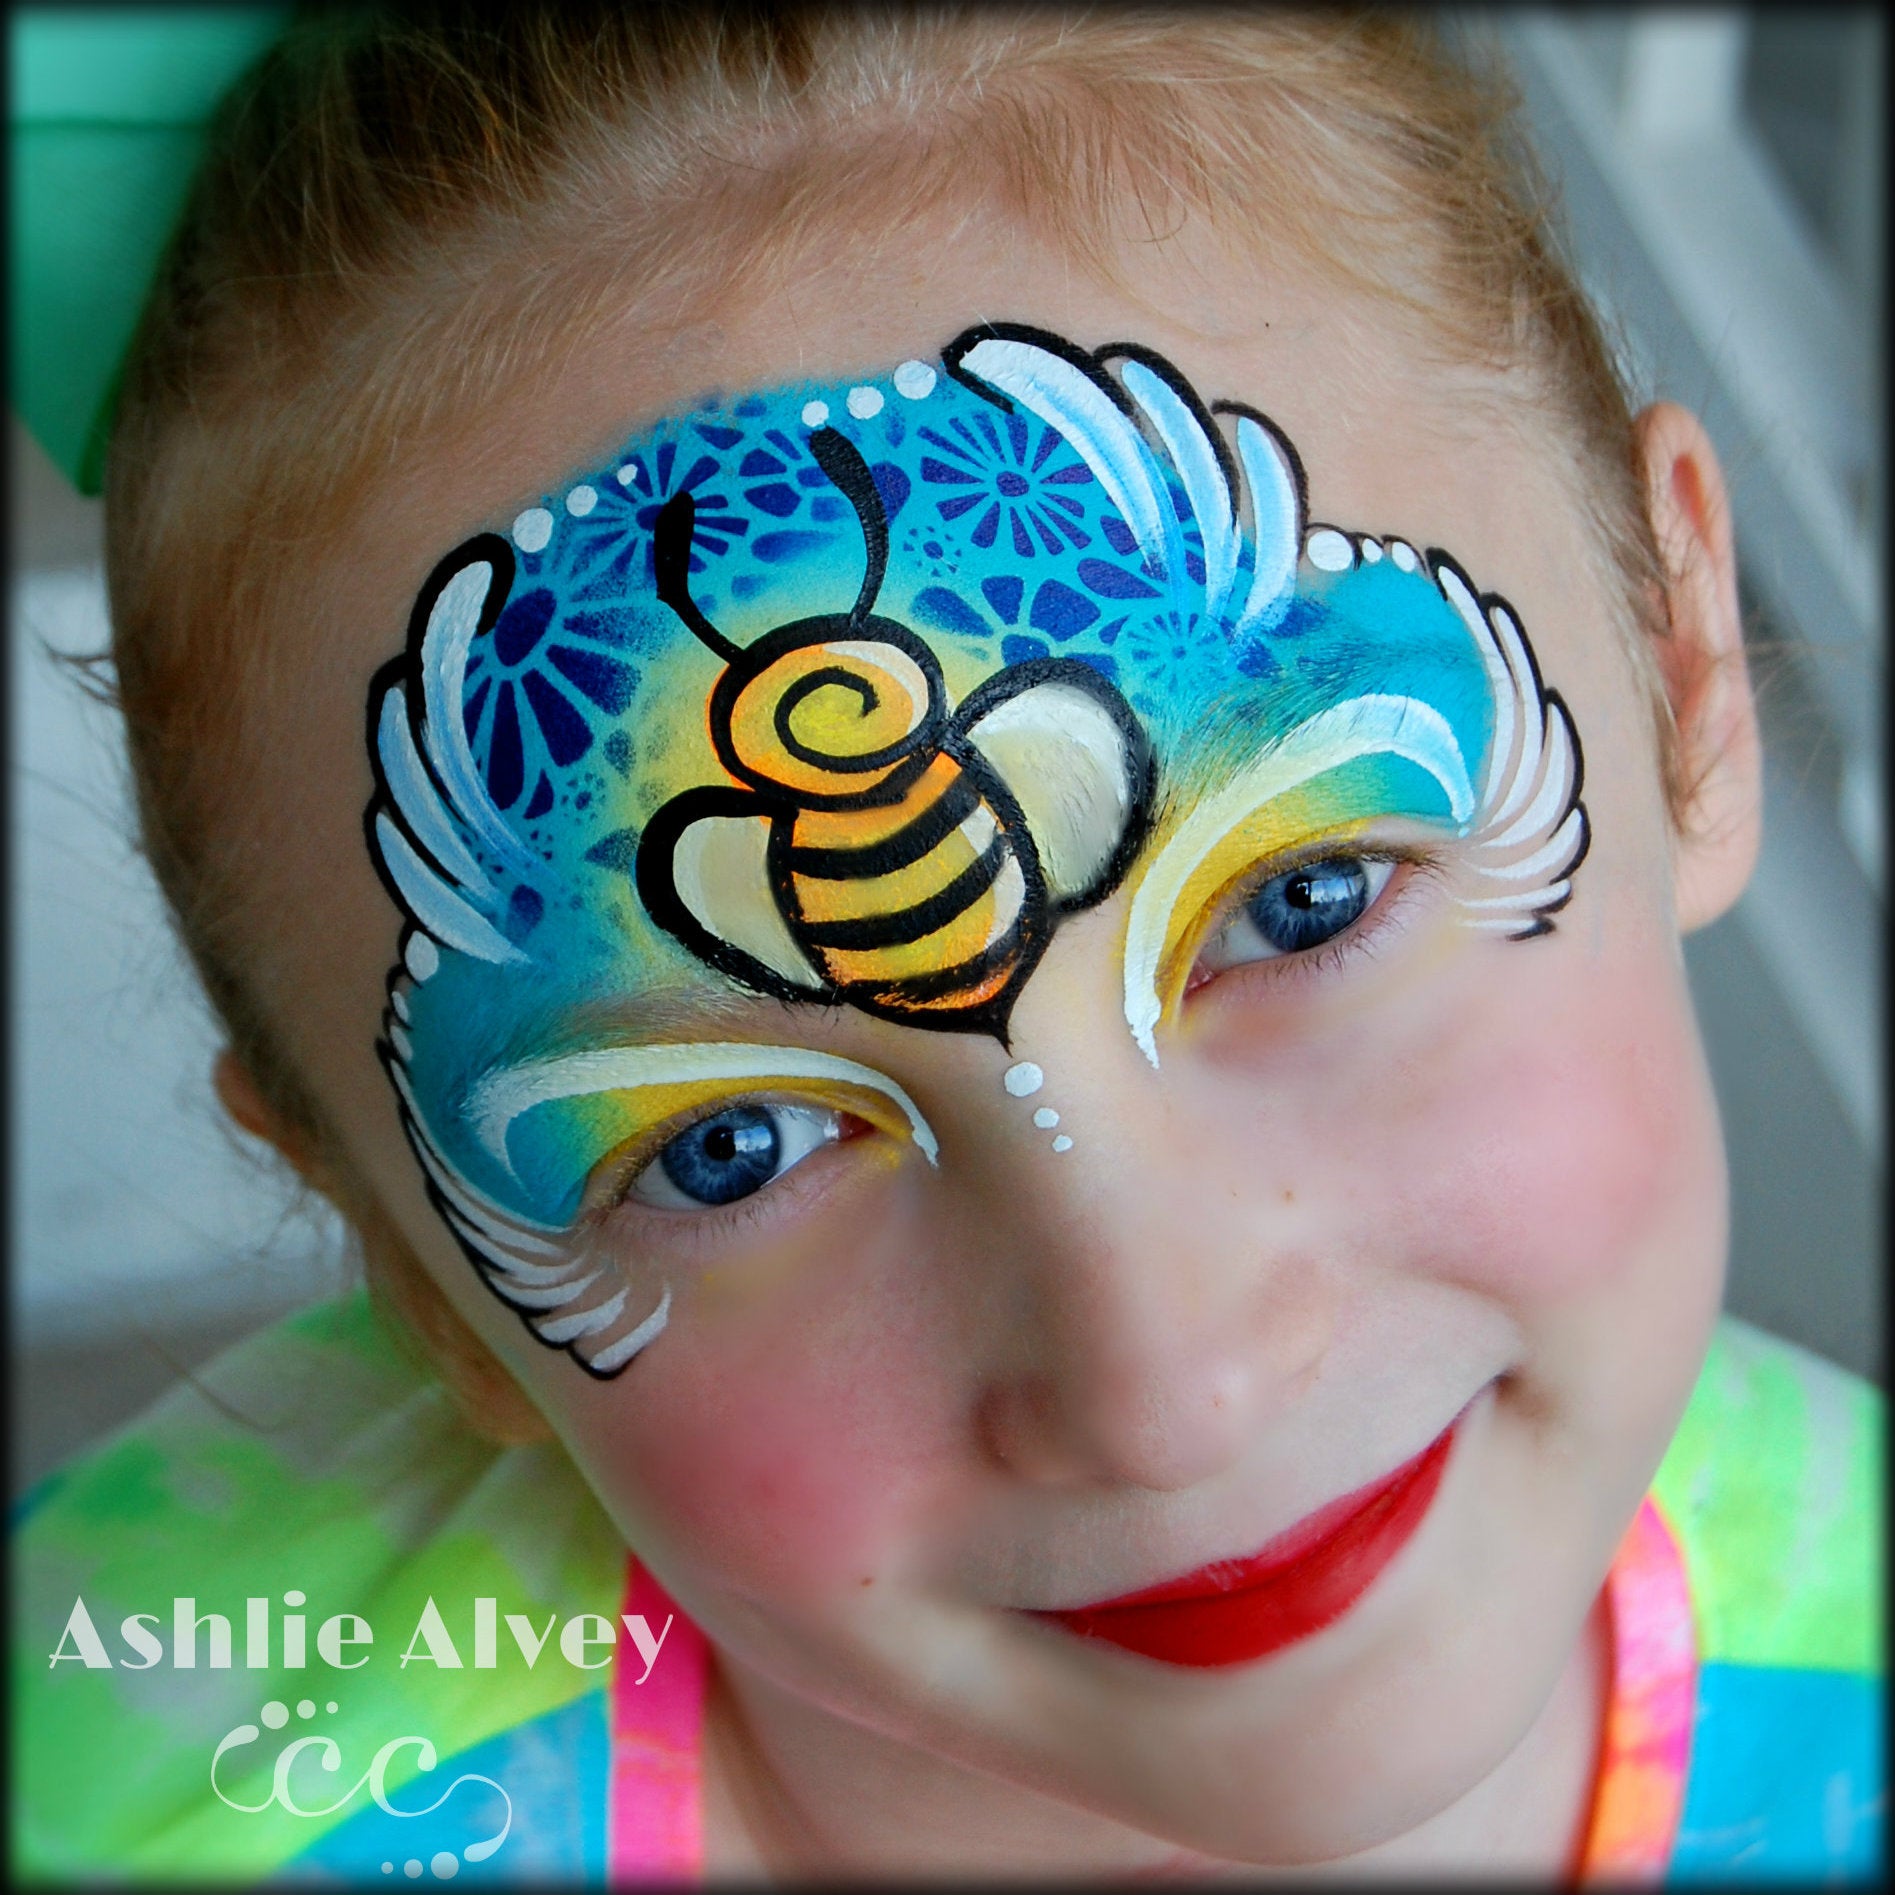 Bumble Bee Design Tutorial by Artist Ashlie Alvey